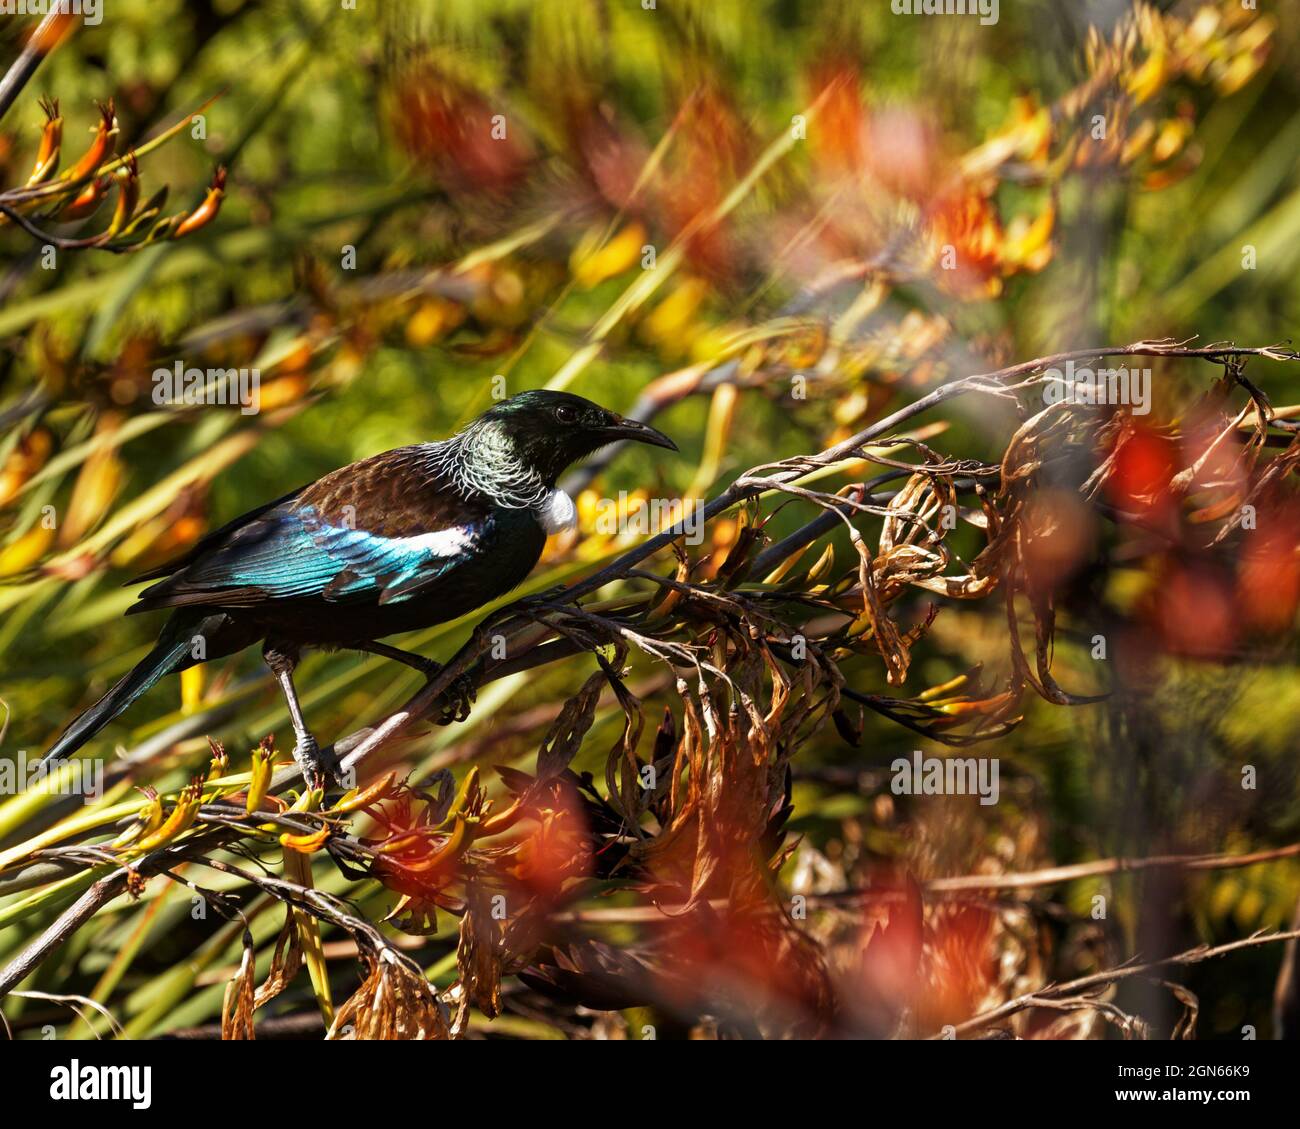 Tui, endemic passerine bird of New Zealand, on a flax plant, profile Stock Photo